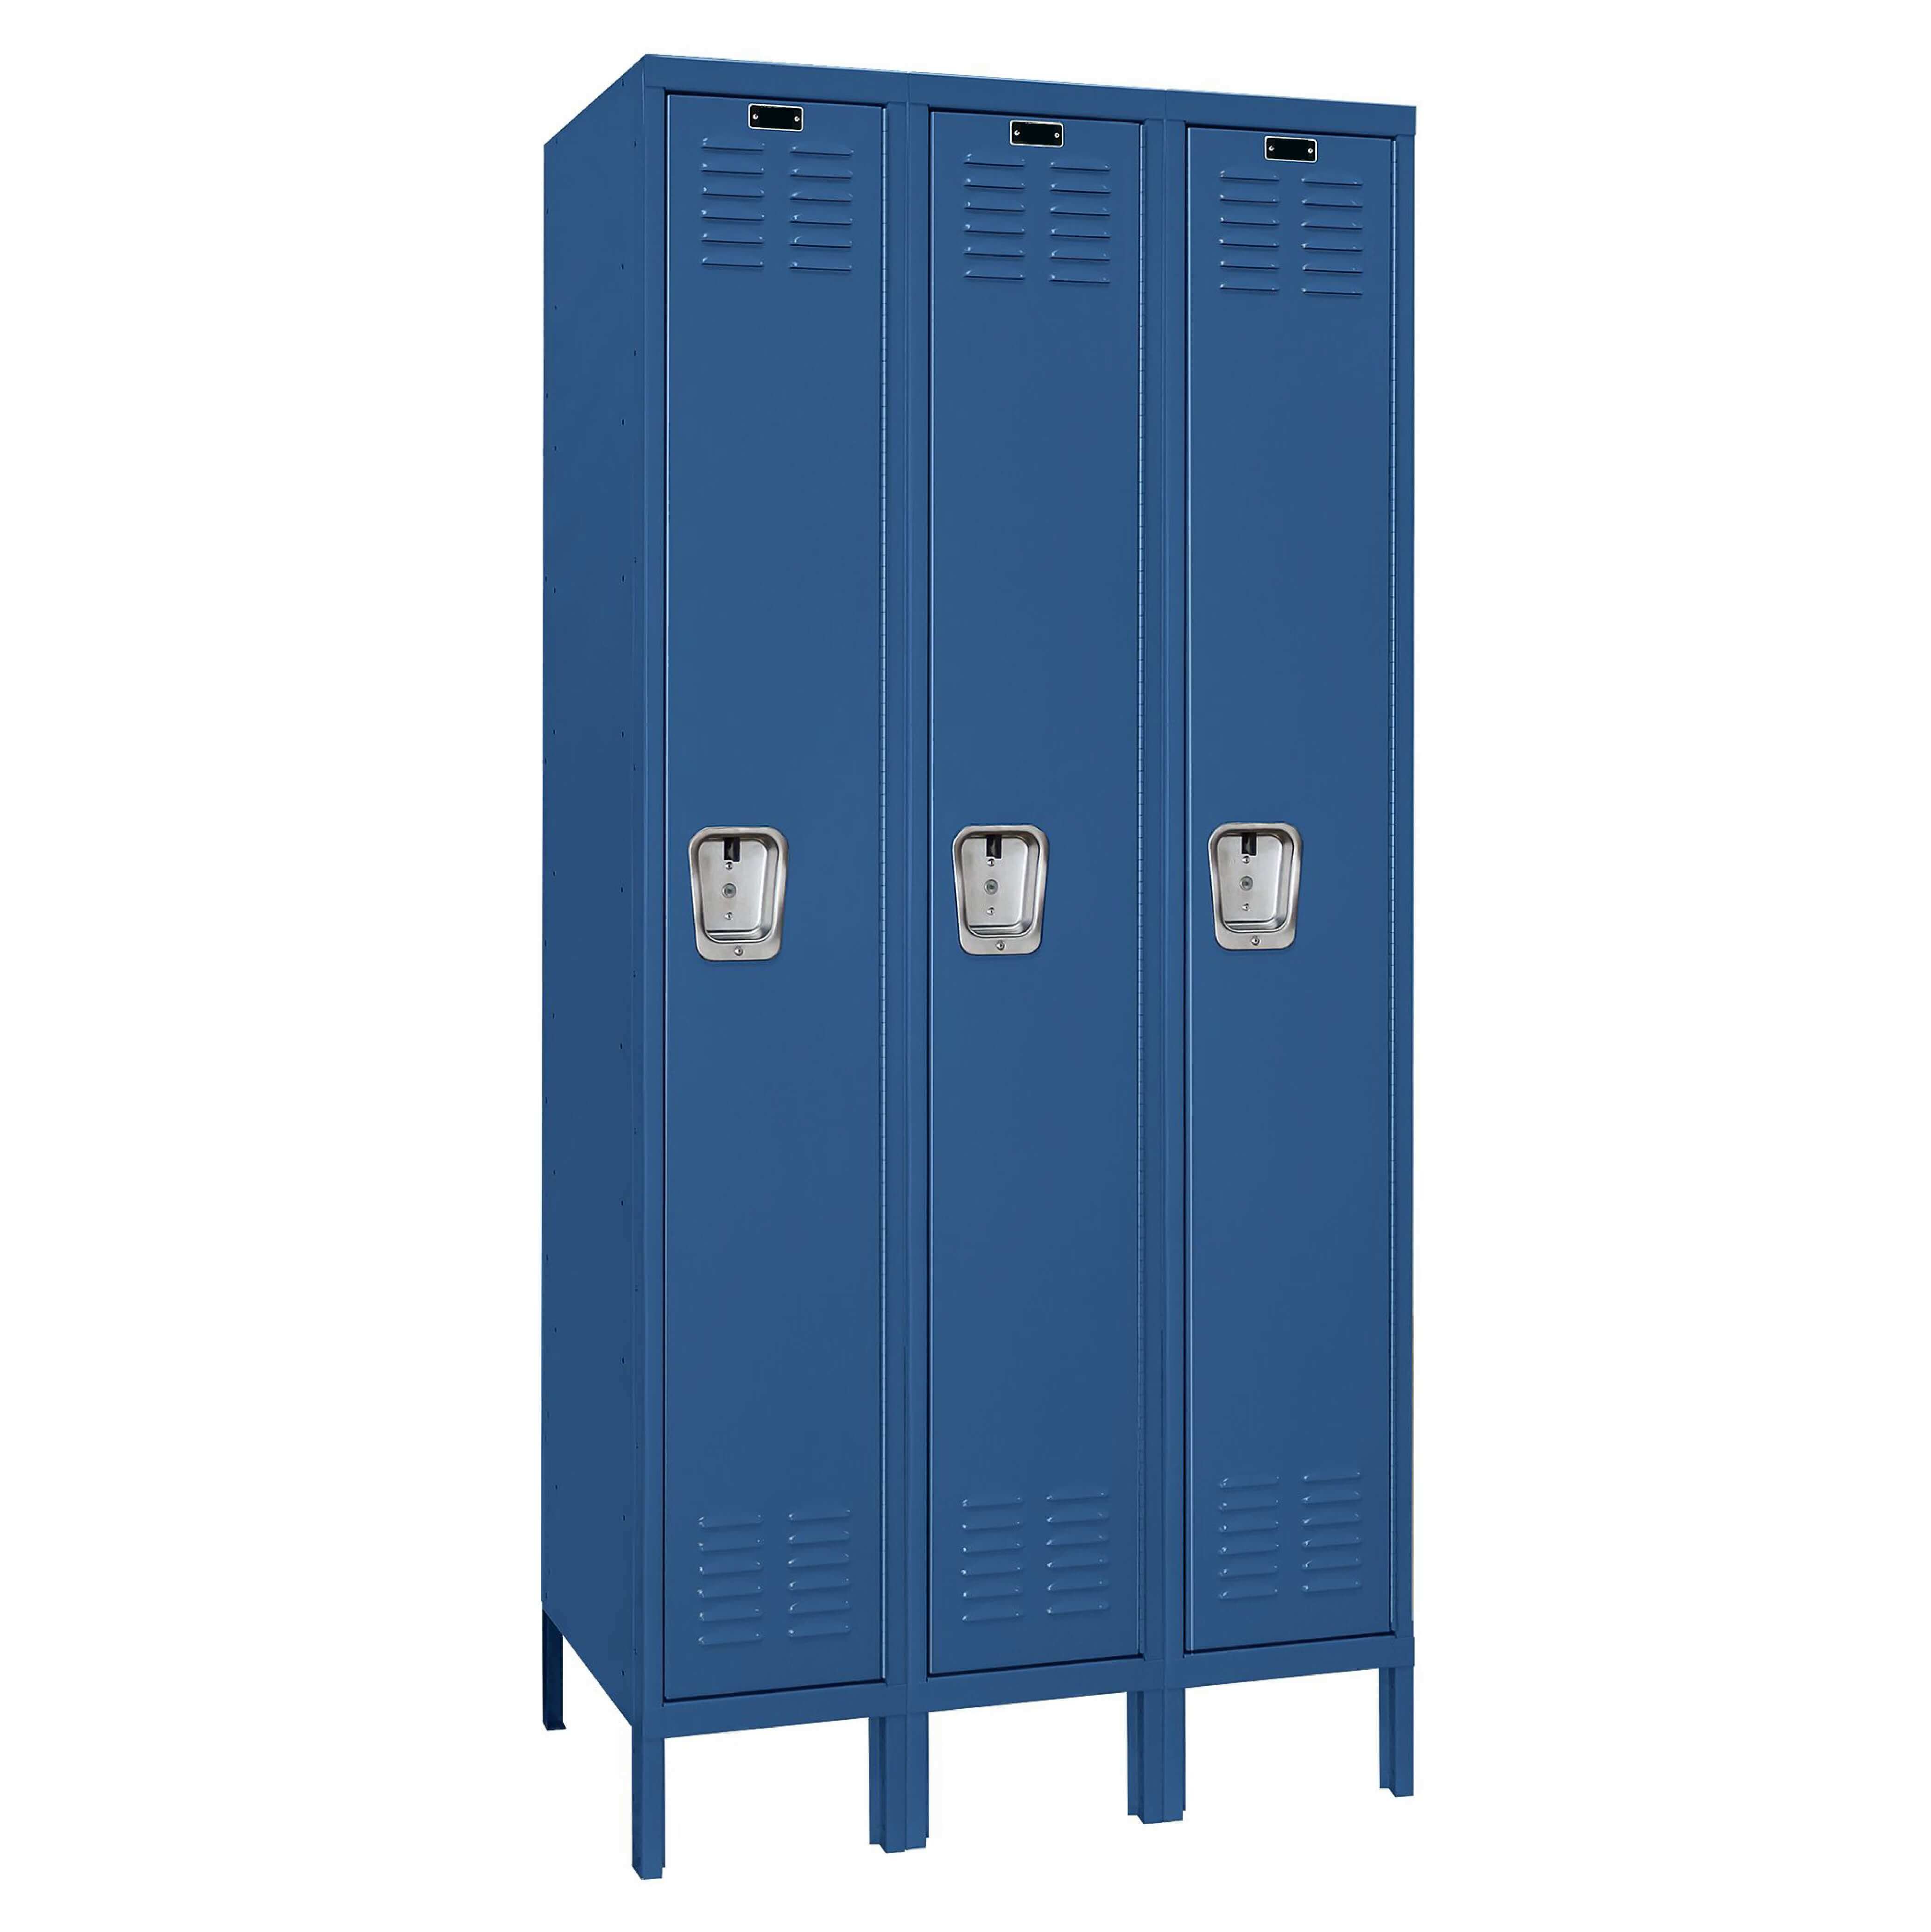 Employee lockers metal lockers patriot series wardrobe lockers 3w 1t marine blue angle view